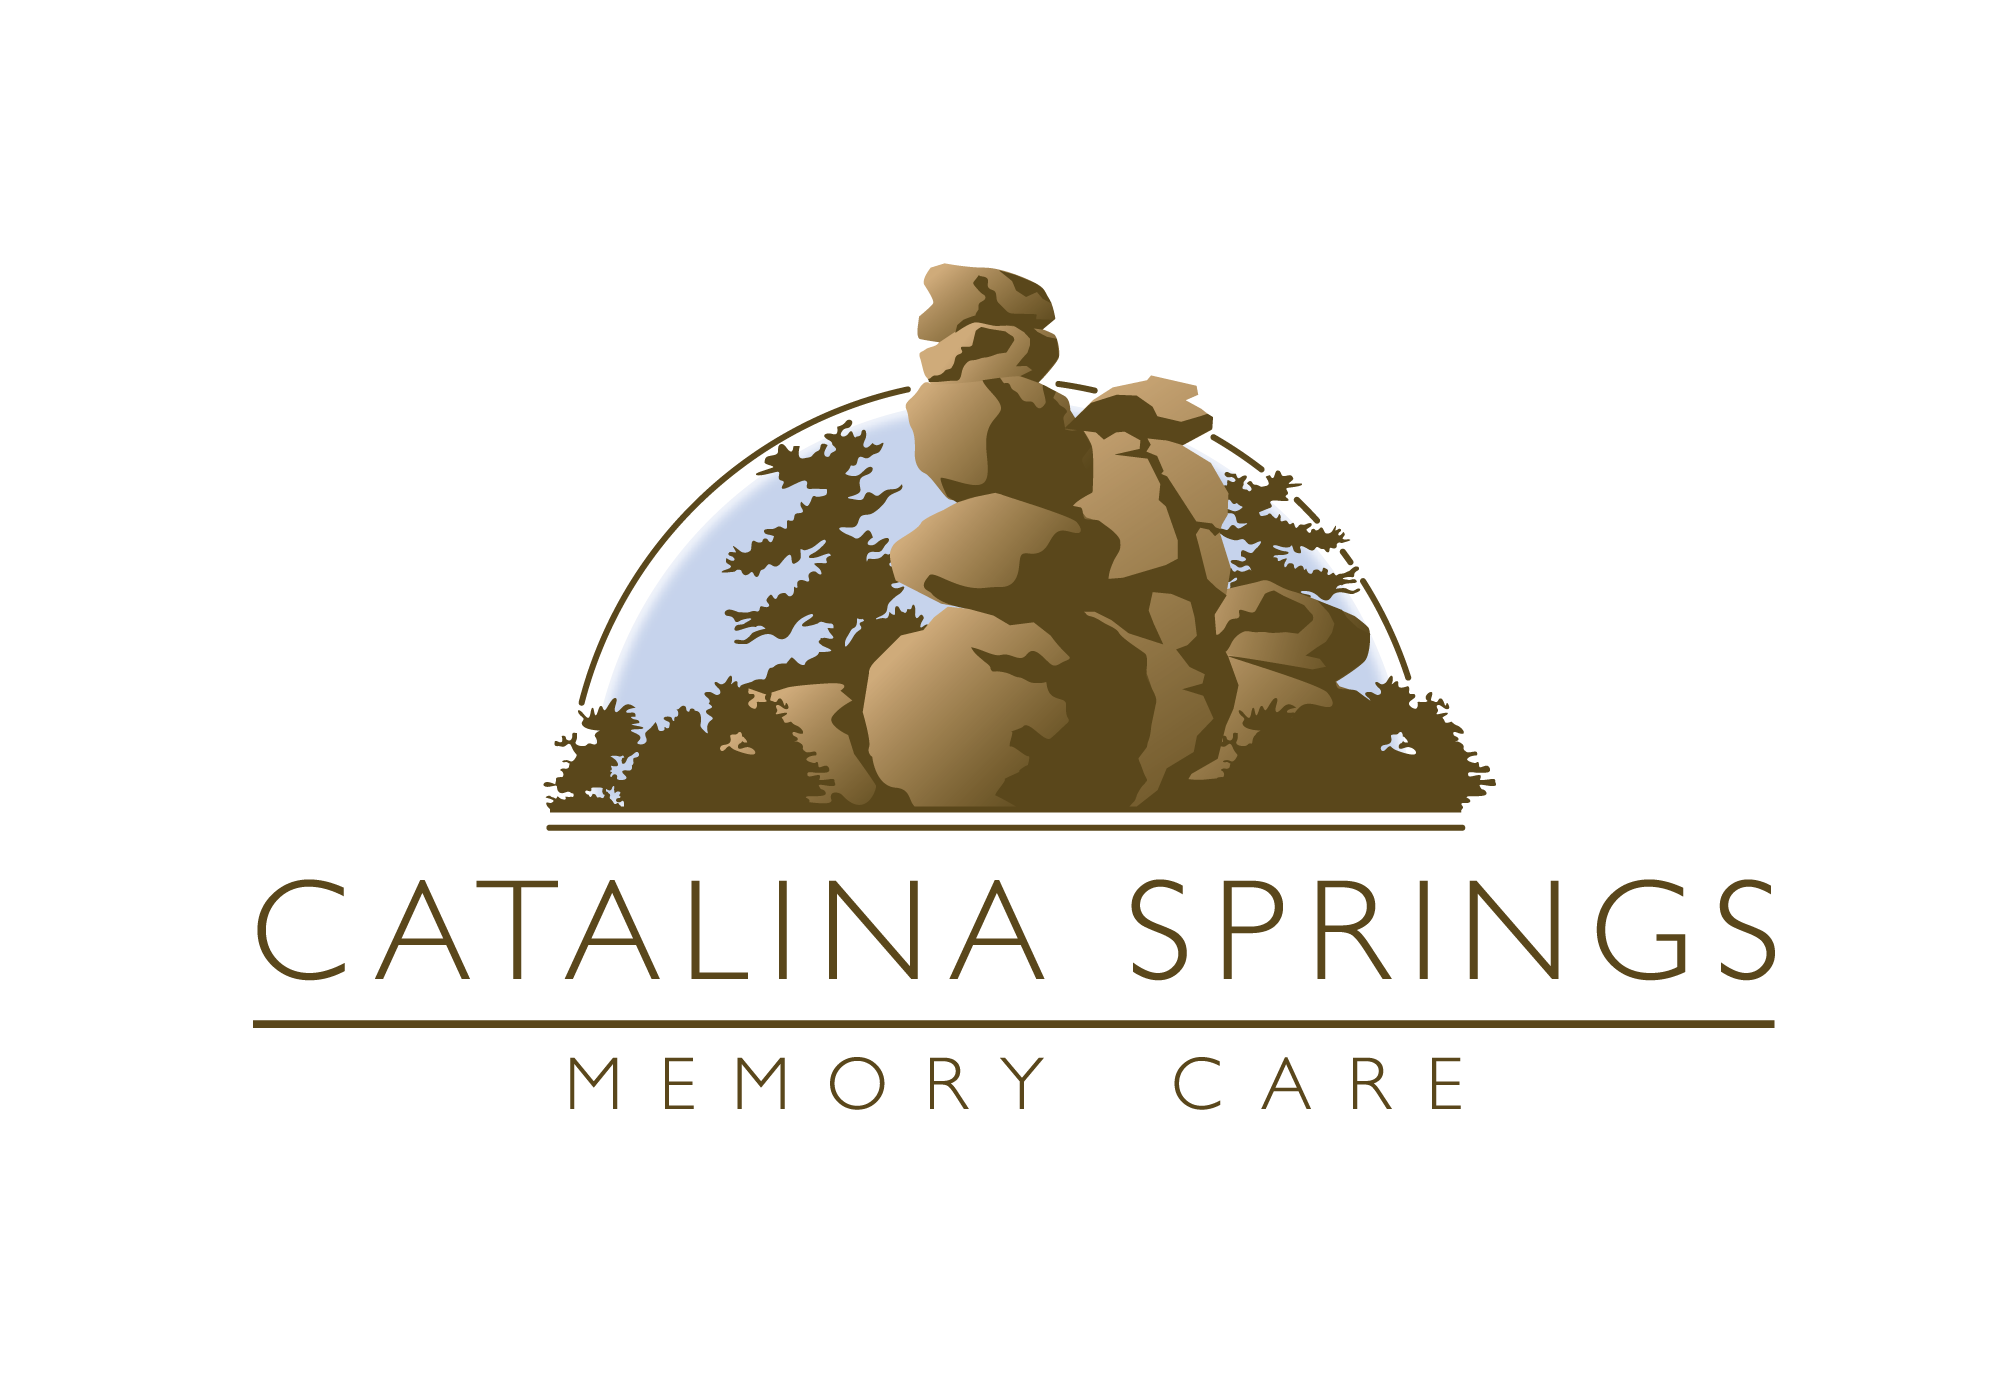 03. Catalina Springs (Regional)